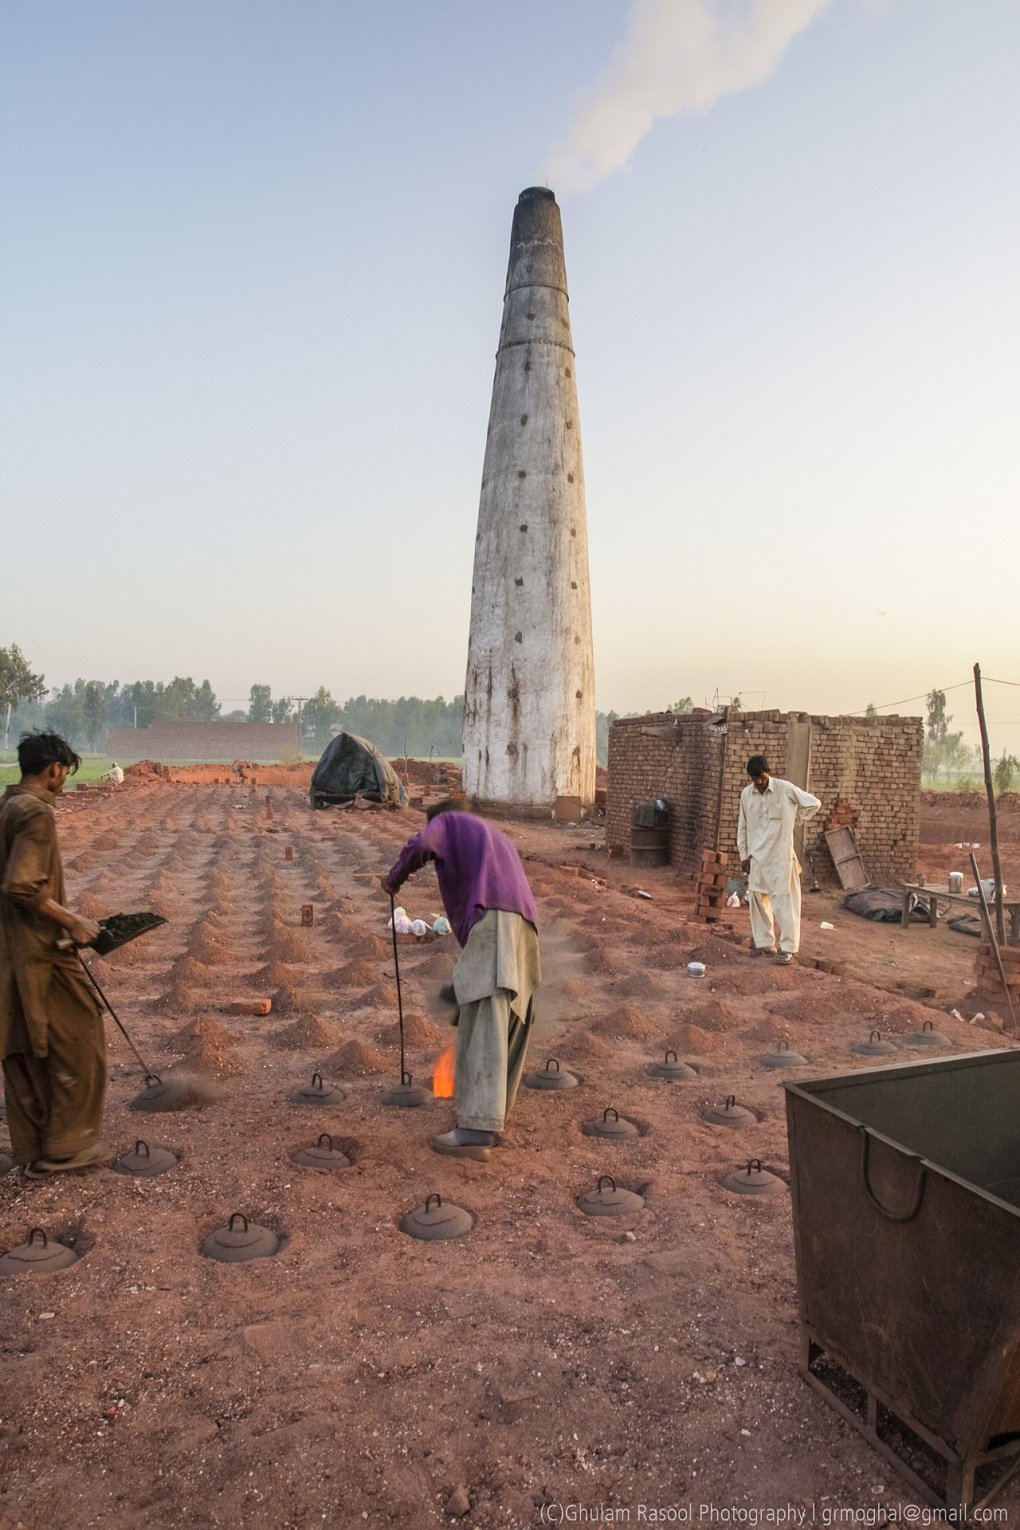 Labourers working at the brick kilns in Punjab, Pakistan  [image by: Ghulam Rasool]